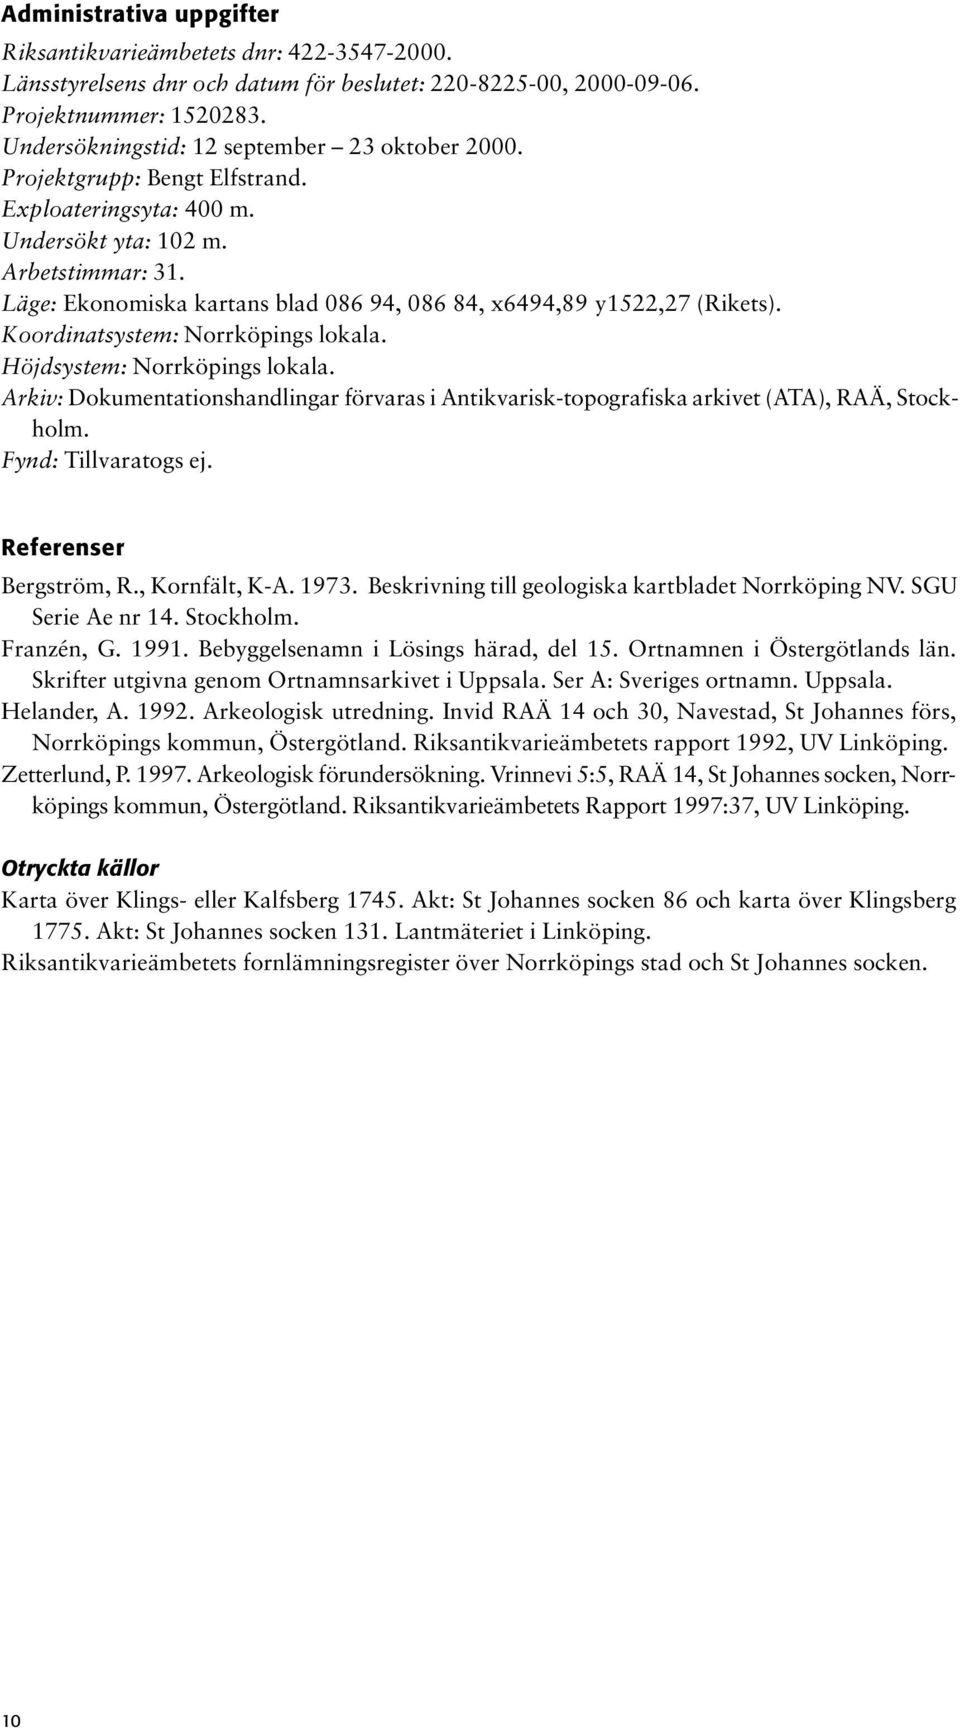 Läge: Ekonomiska kartans blad 086 94, 086 84, x6494,89 y1522,27 (Rikets). Koordinatsystem: Norrköpings lokala. Höjdsystem: Norrköpings lokala.